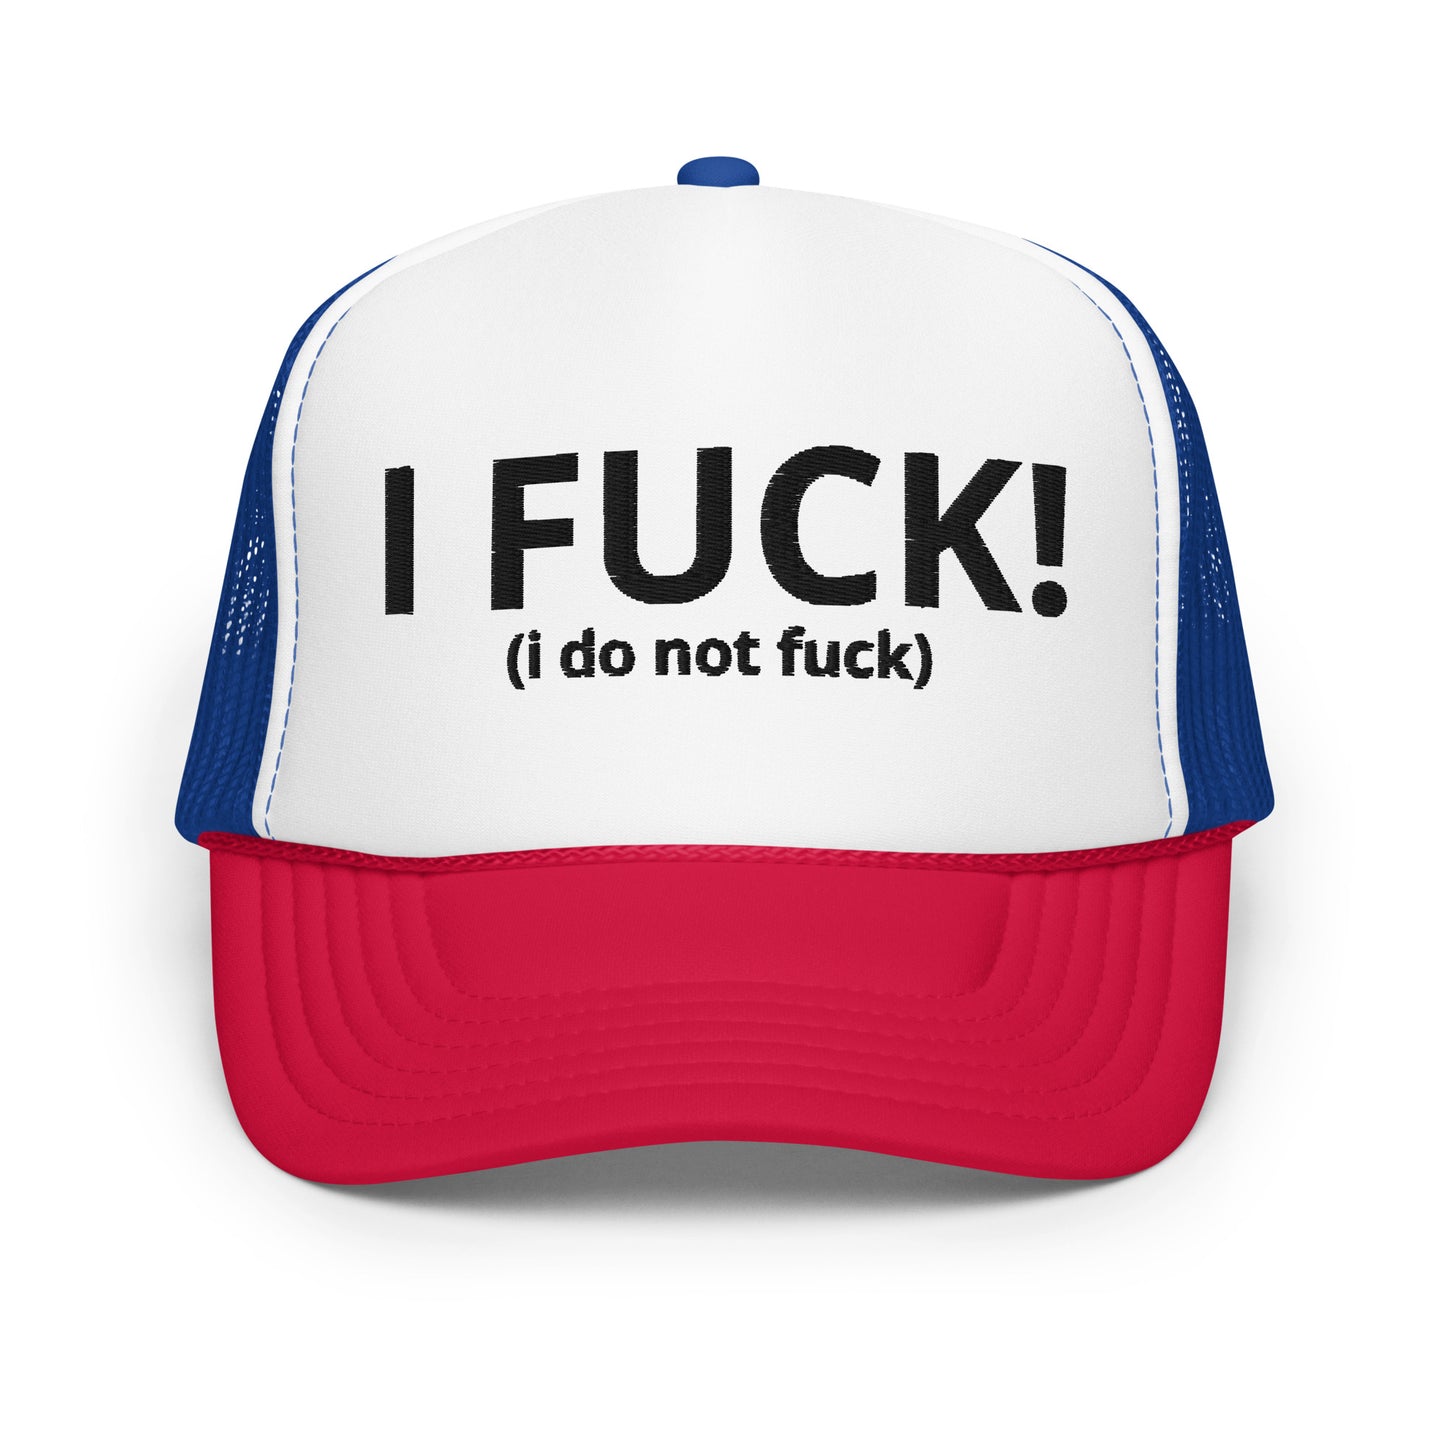 I FUCK hat